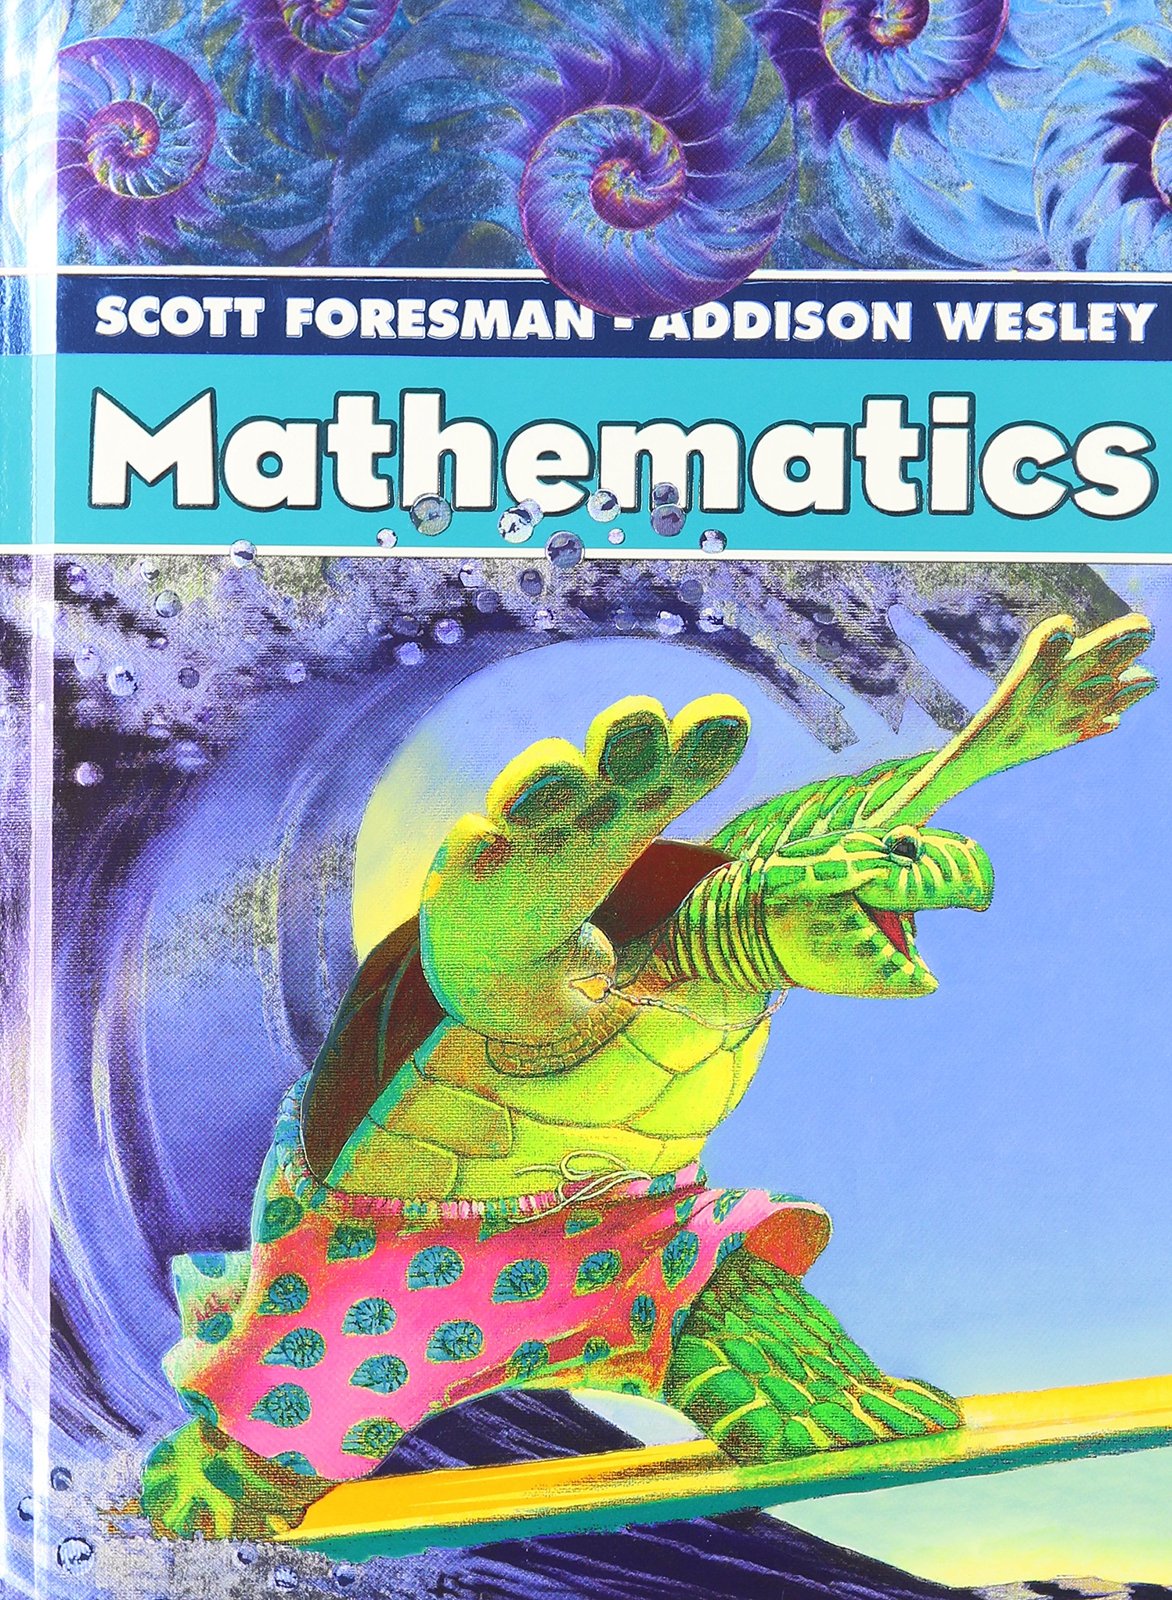 scott-foresman-addison-wesley-mathematics-hardcover-grade-4-school-textbooks-study-guides